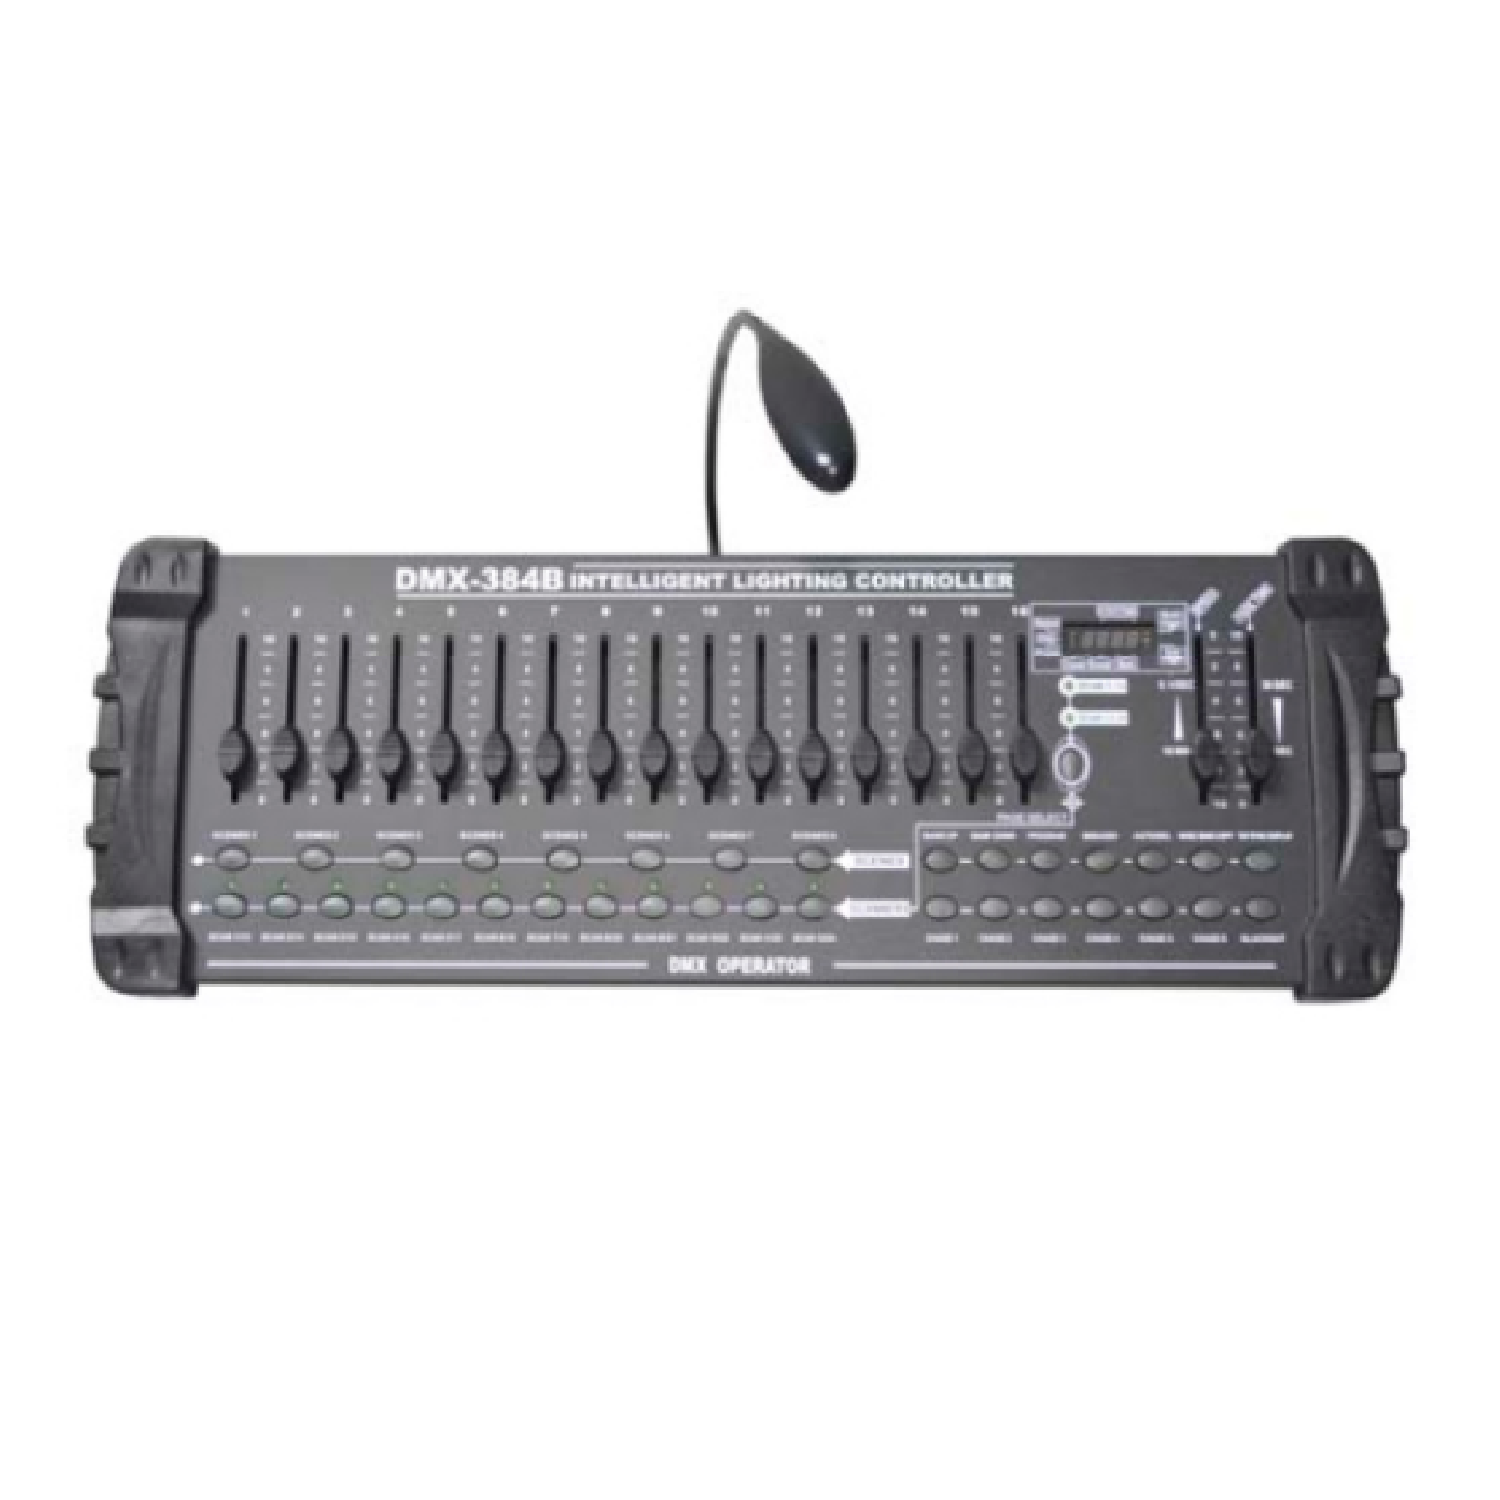 Intelligent Lighting Controller 384 Channels 16/32 Channels Slides   DMX 384B showart